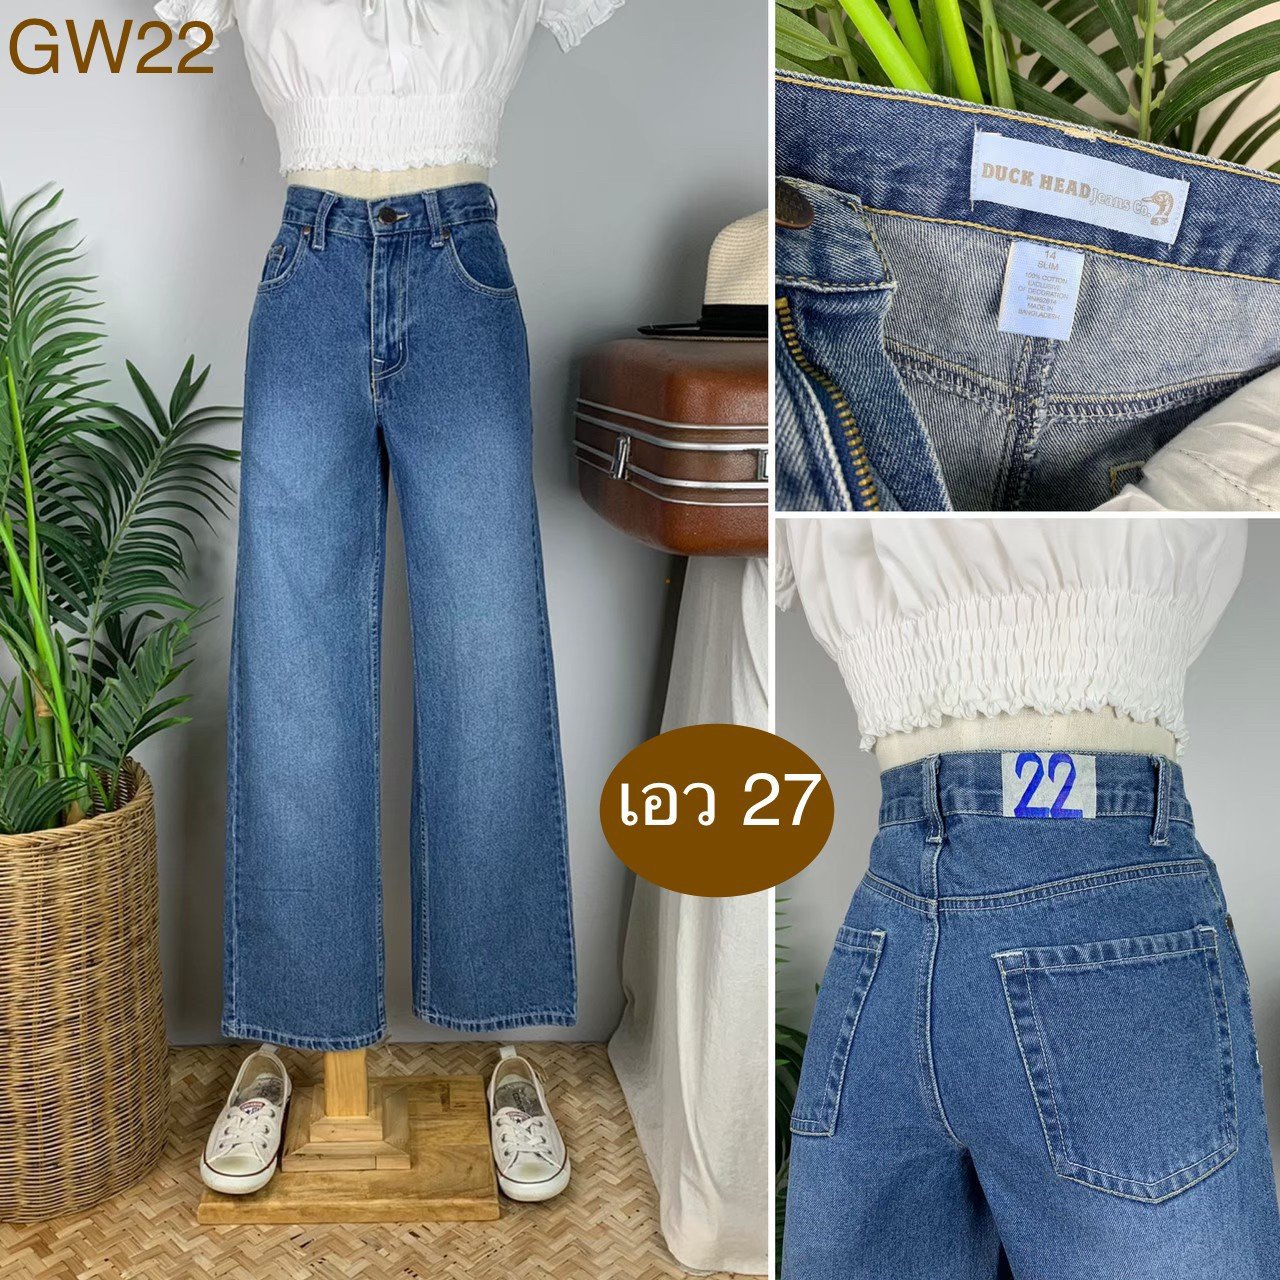 ♥️ รหัสGW22 ▪️ป้าย Duck Head Jeans  ▪️ เอว 27" สะโพก 33" ต้นขา 22" ▪️เป้า 10.5" ยาว 38" (นิ้ว)